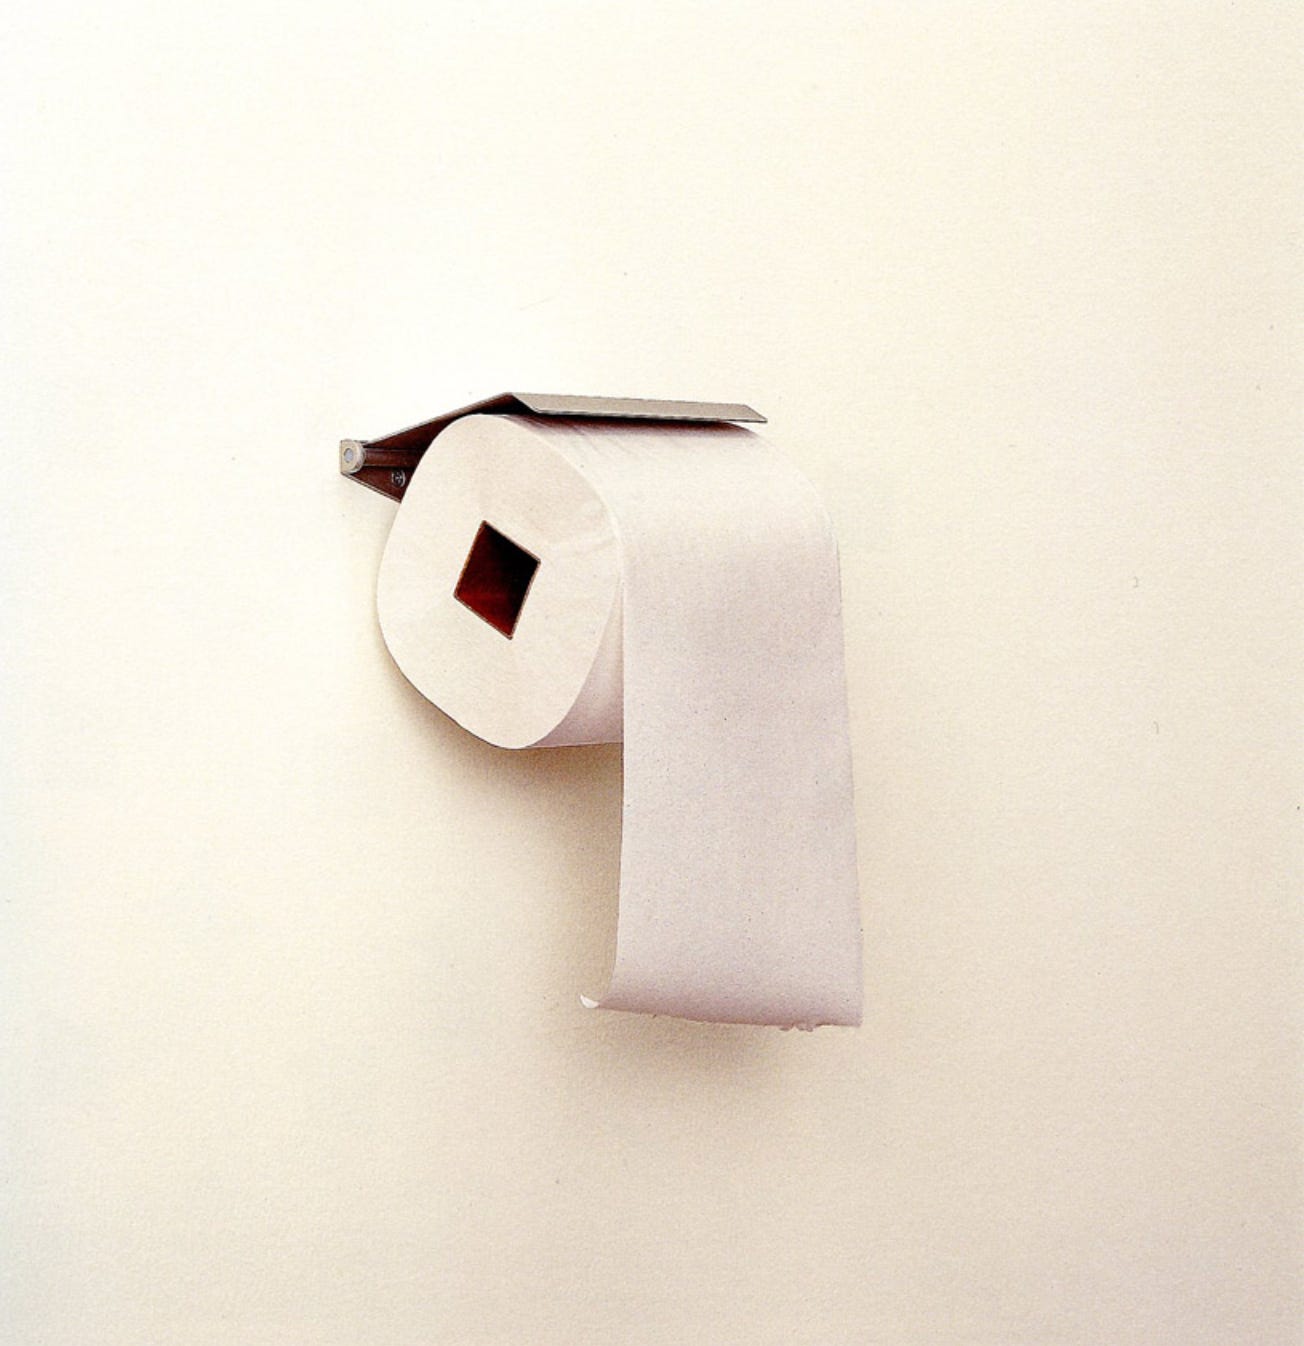 Shigeru Ban’s square-cored toilet roll.